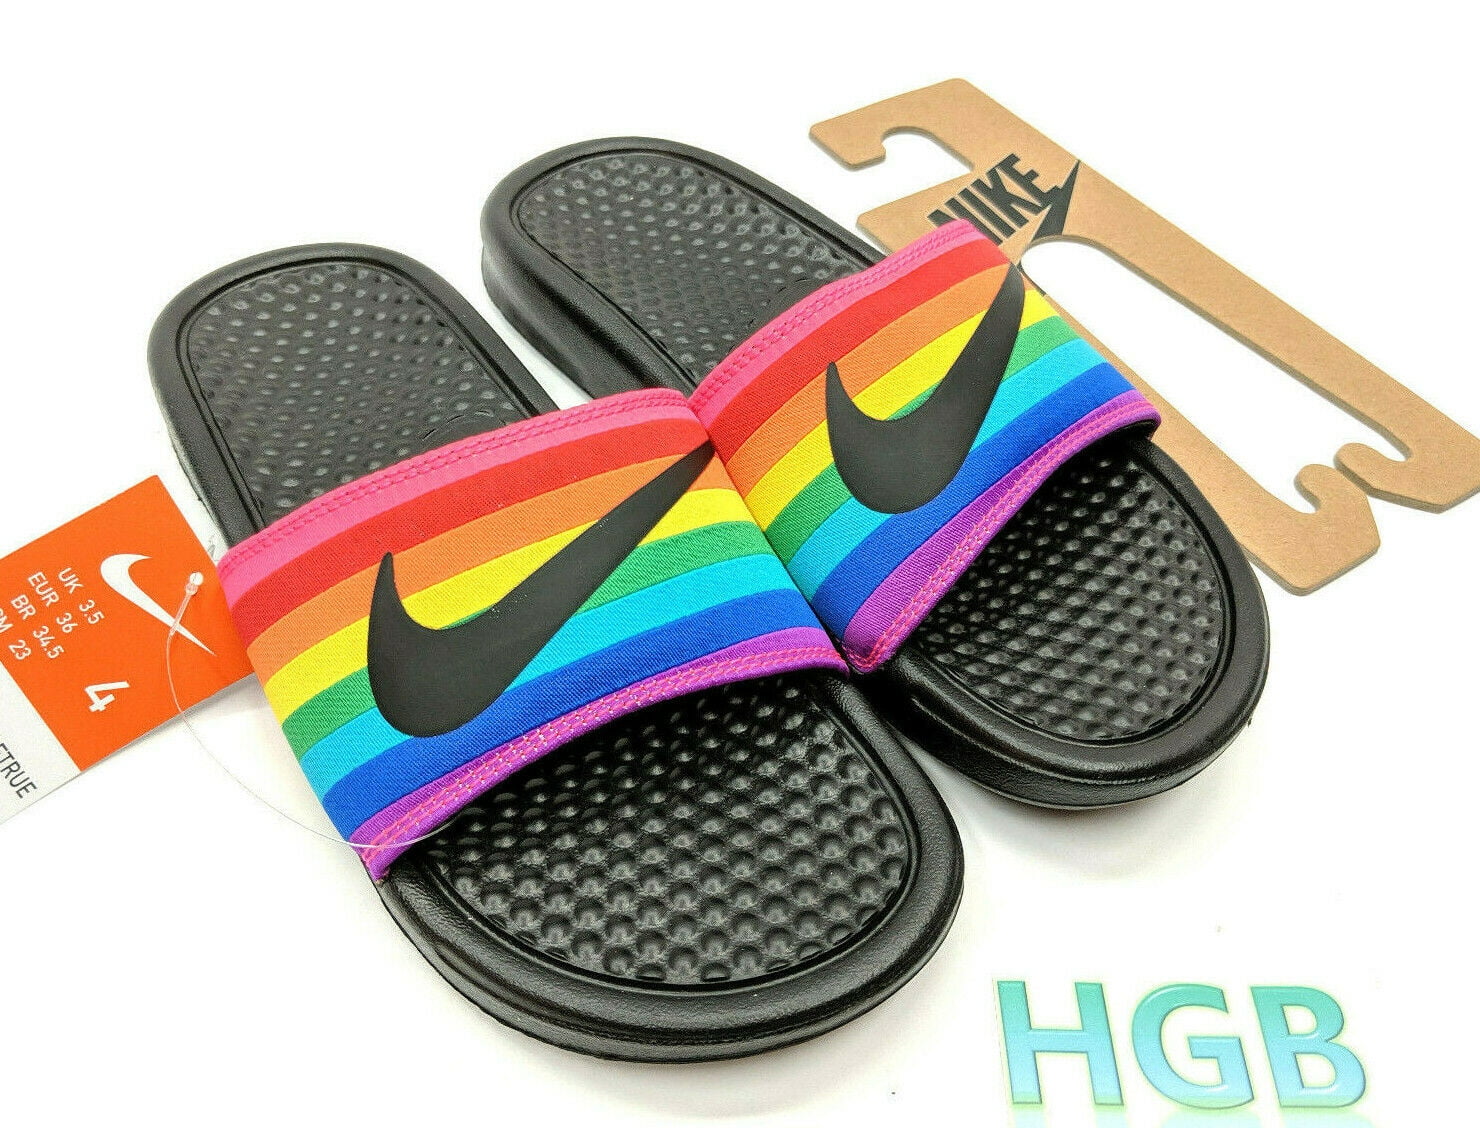 nike sandals rainbow